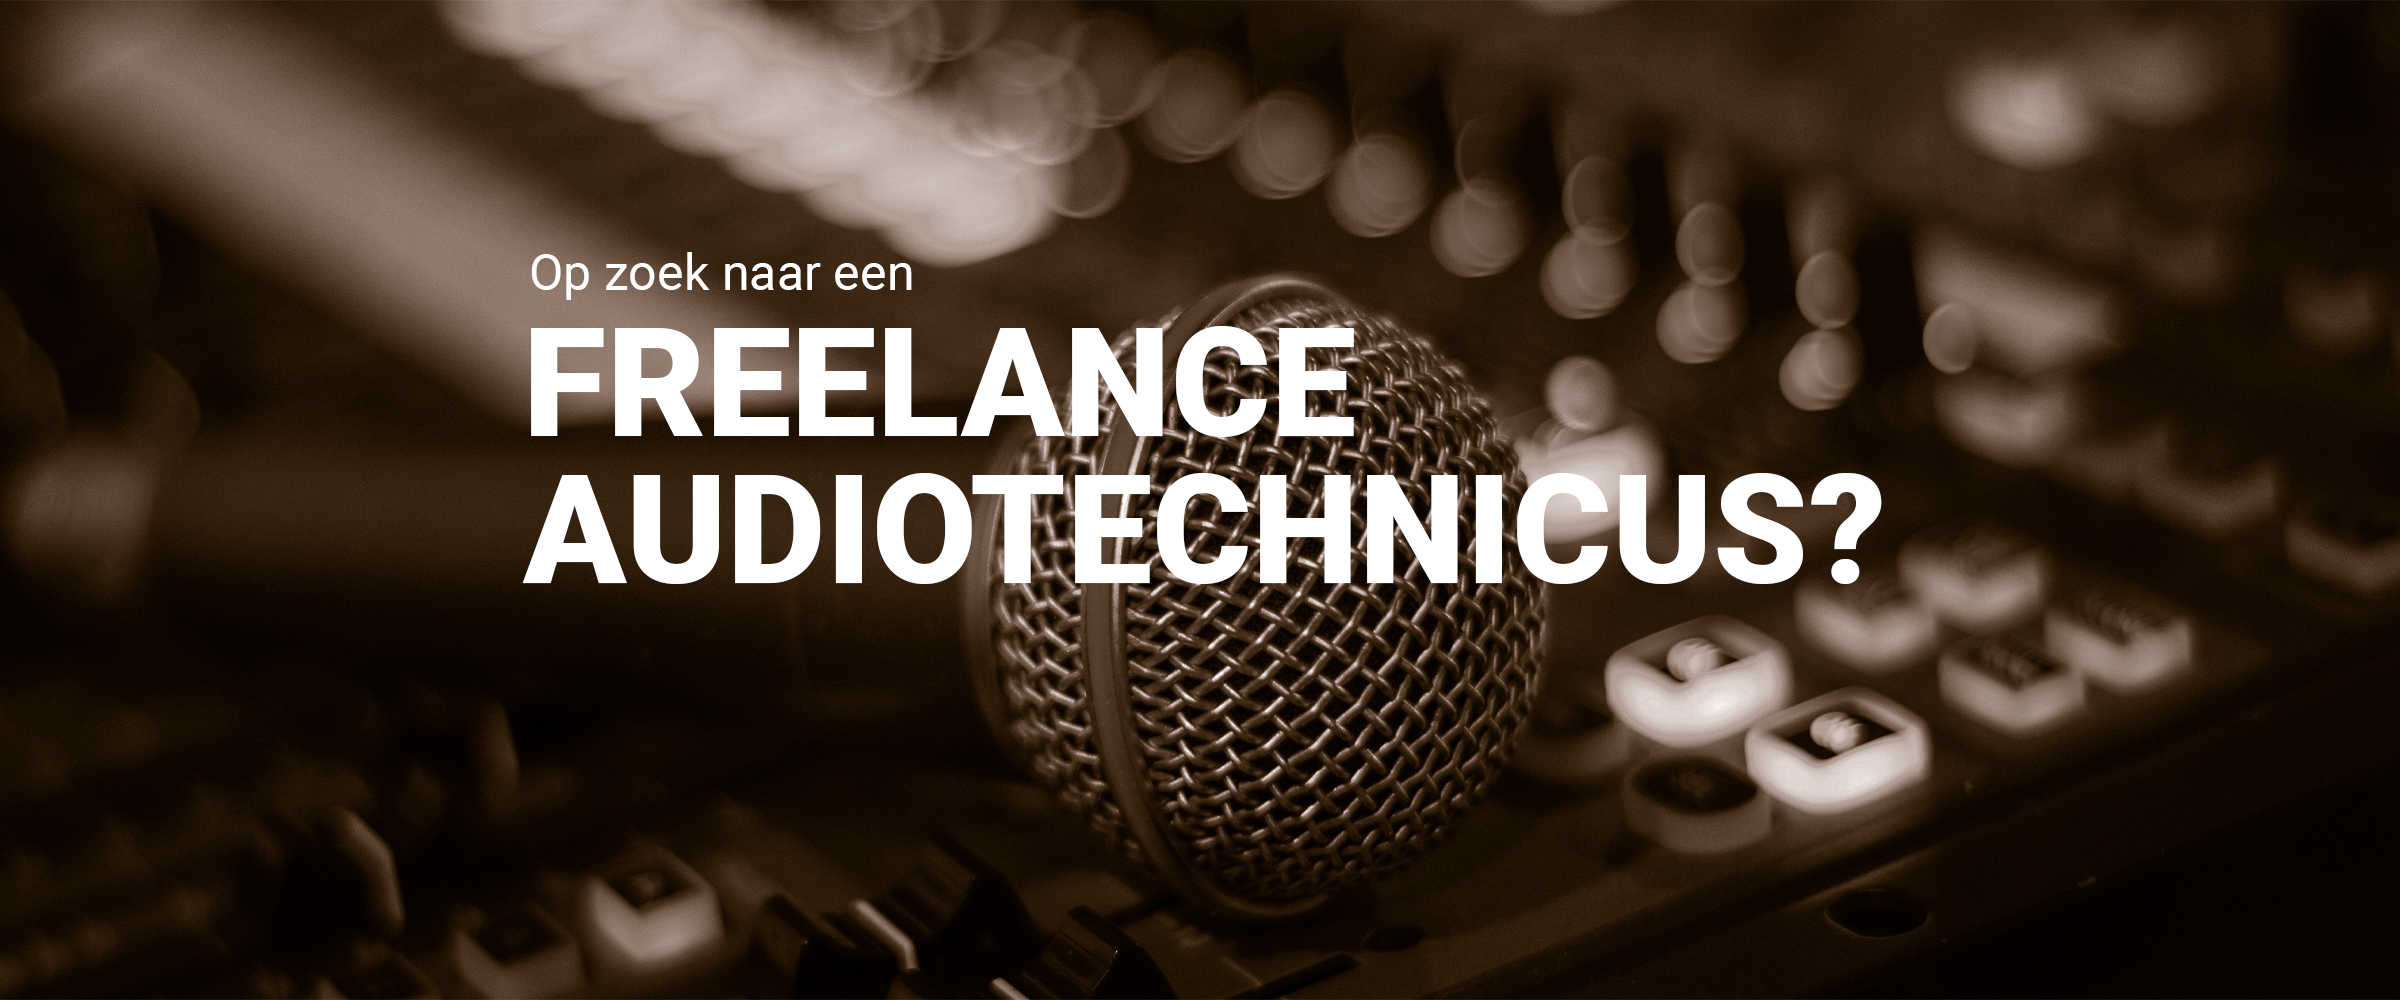 Freelance audiotechnicus